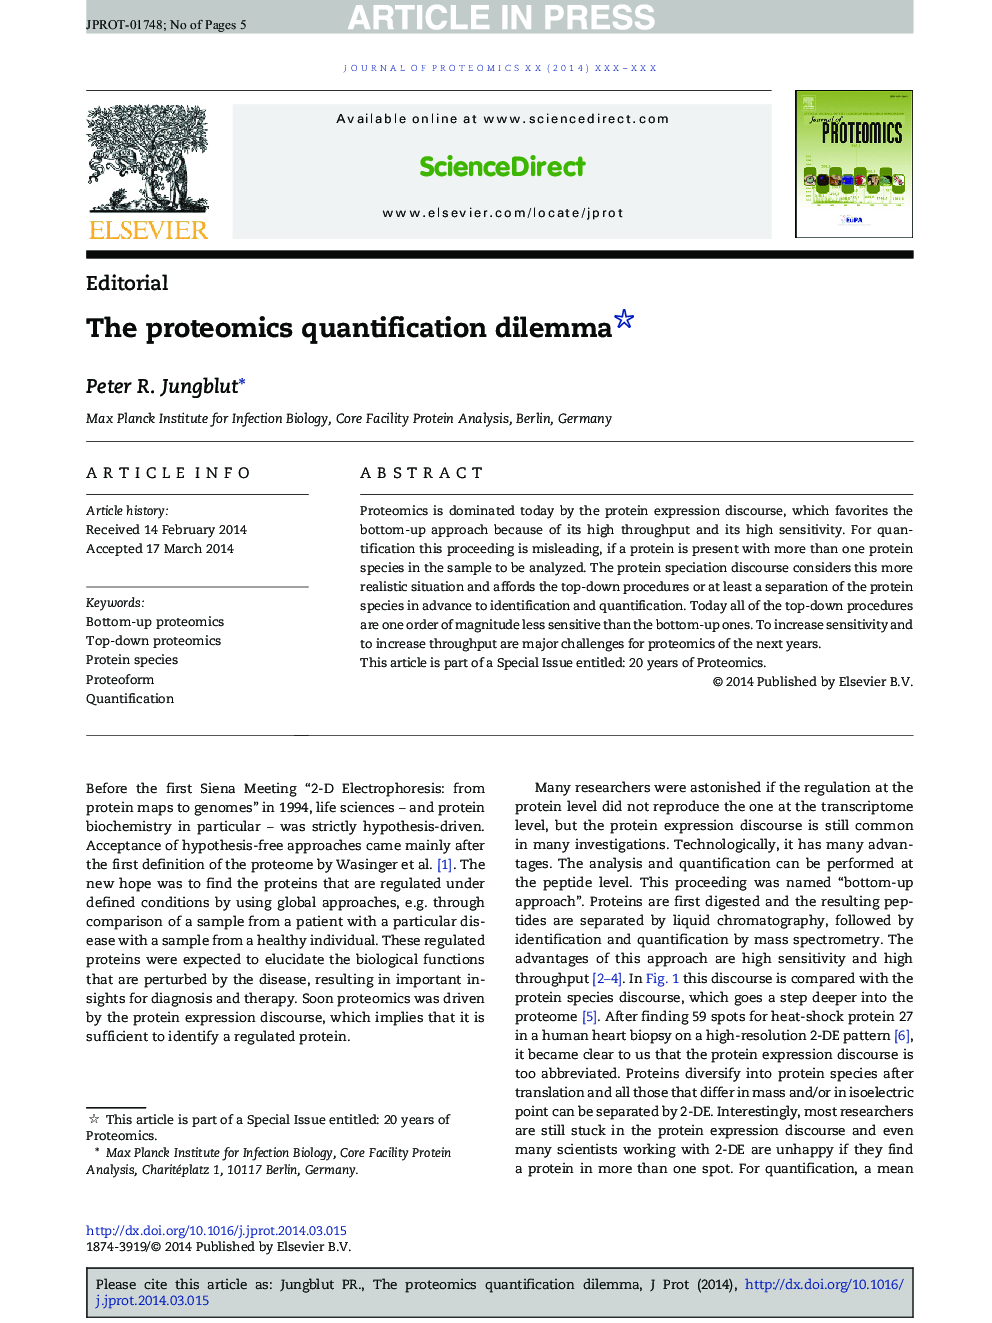 The proteomics quantification dilemma